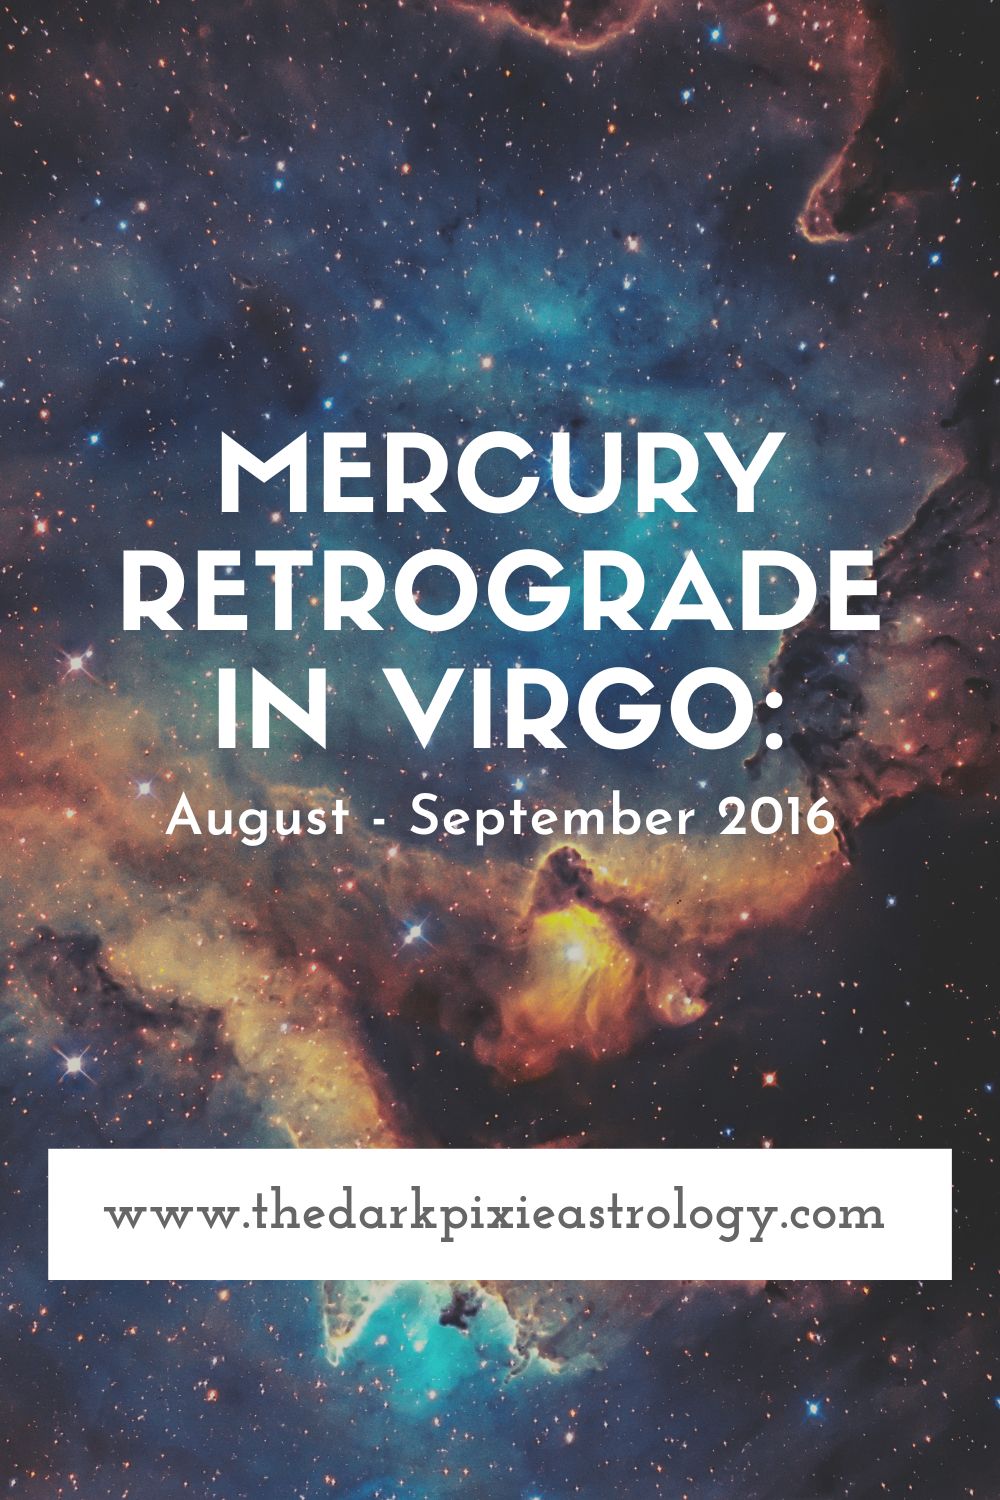 Mercury Retrograde in Virgo: August - September 2016 - The Dark Pixie Astrology